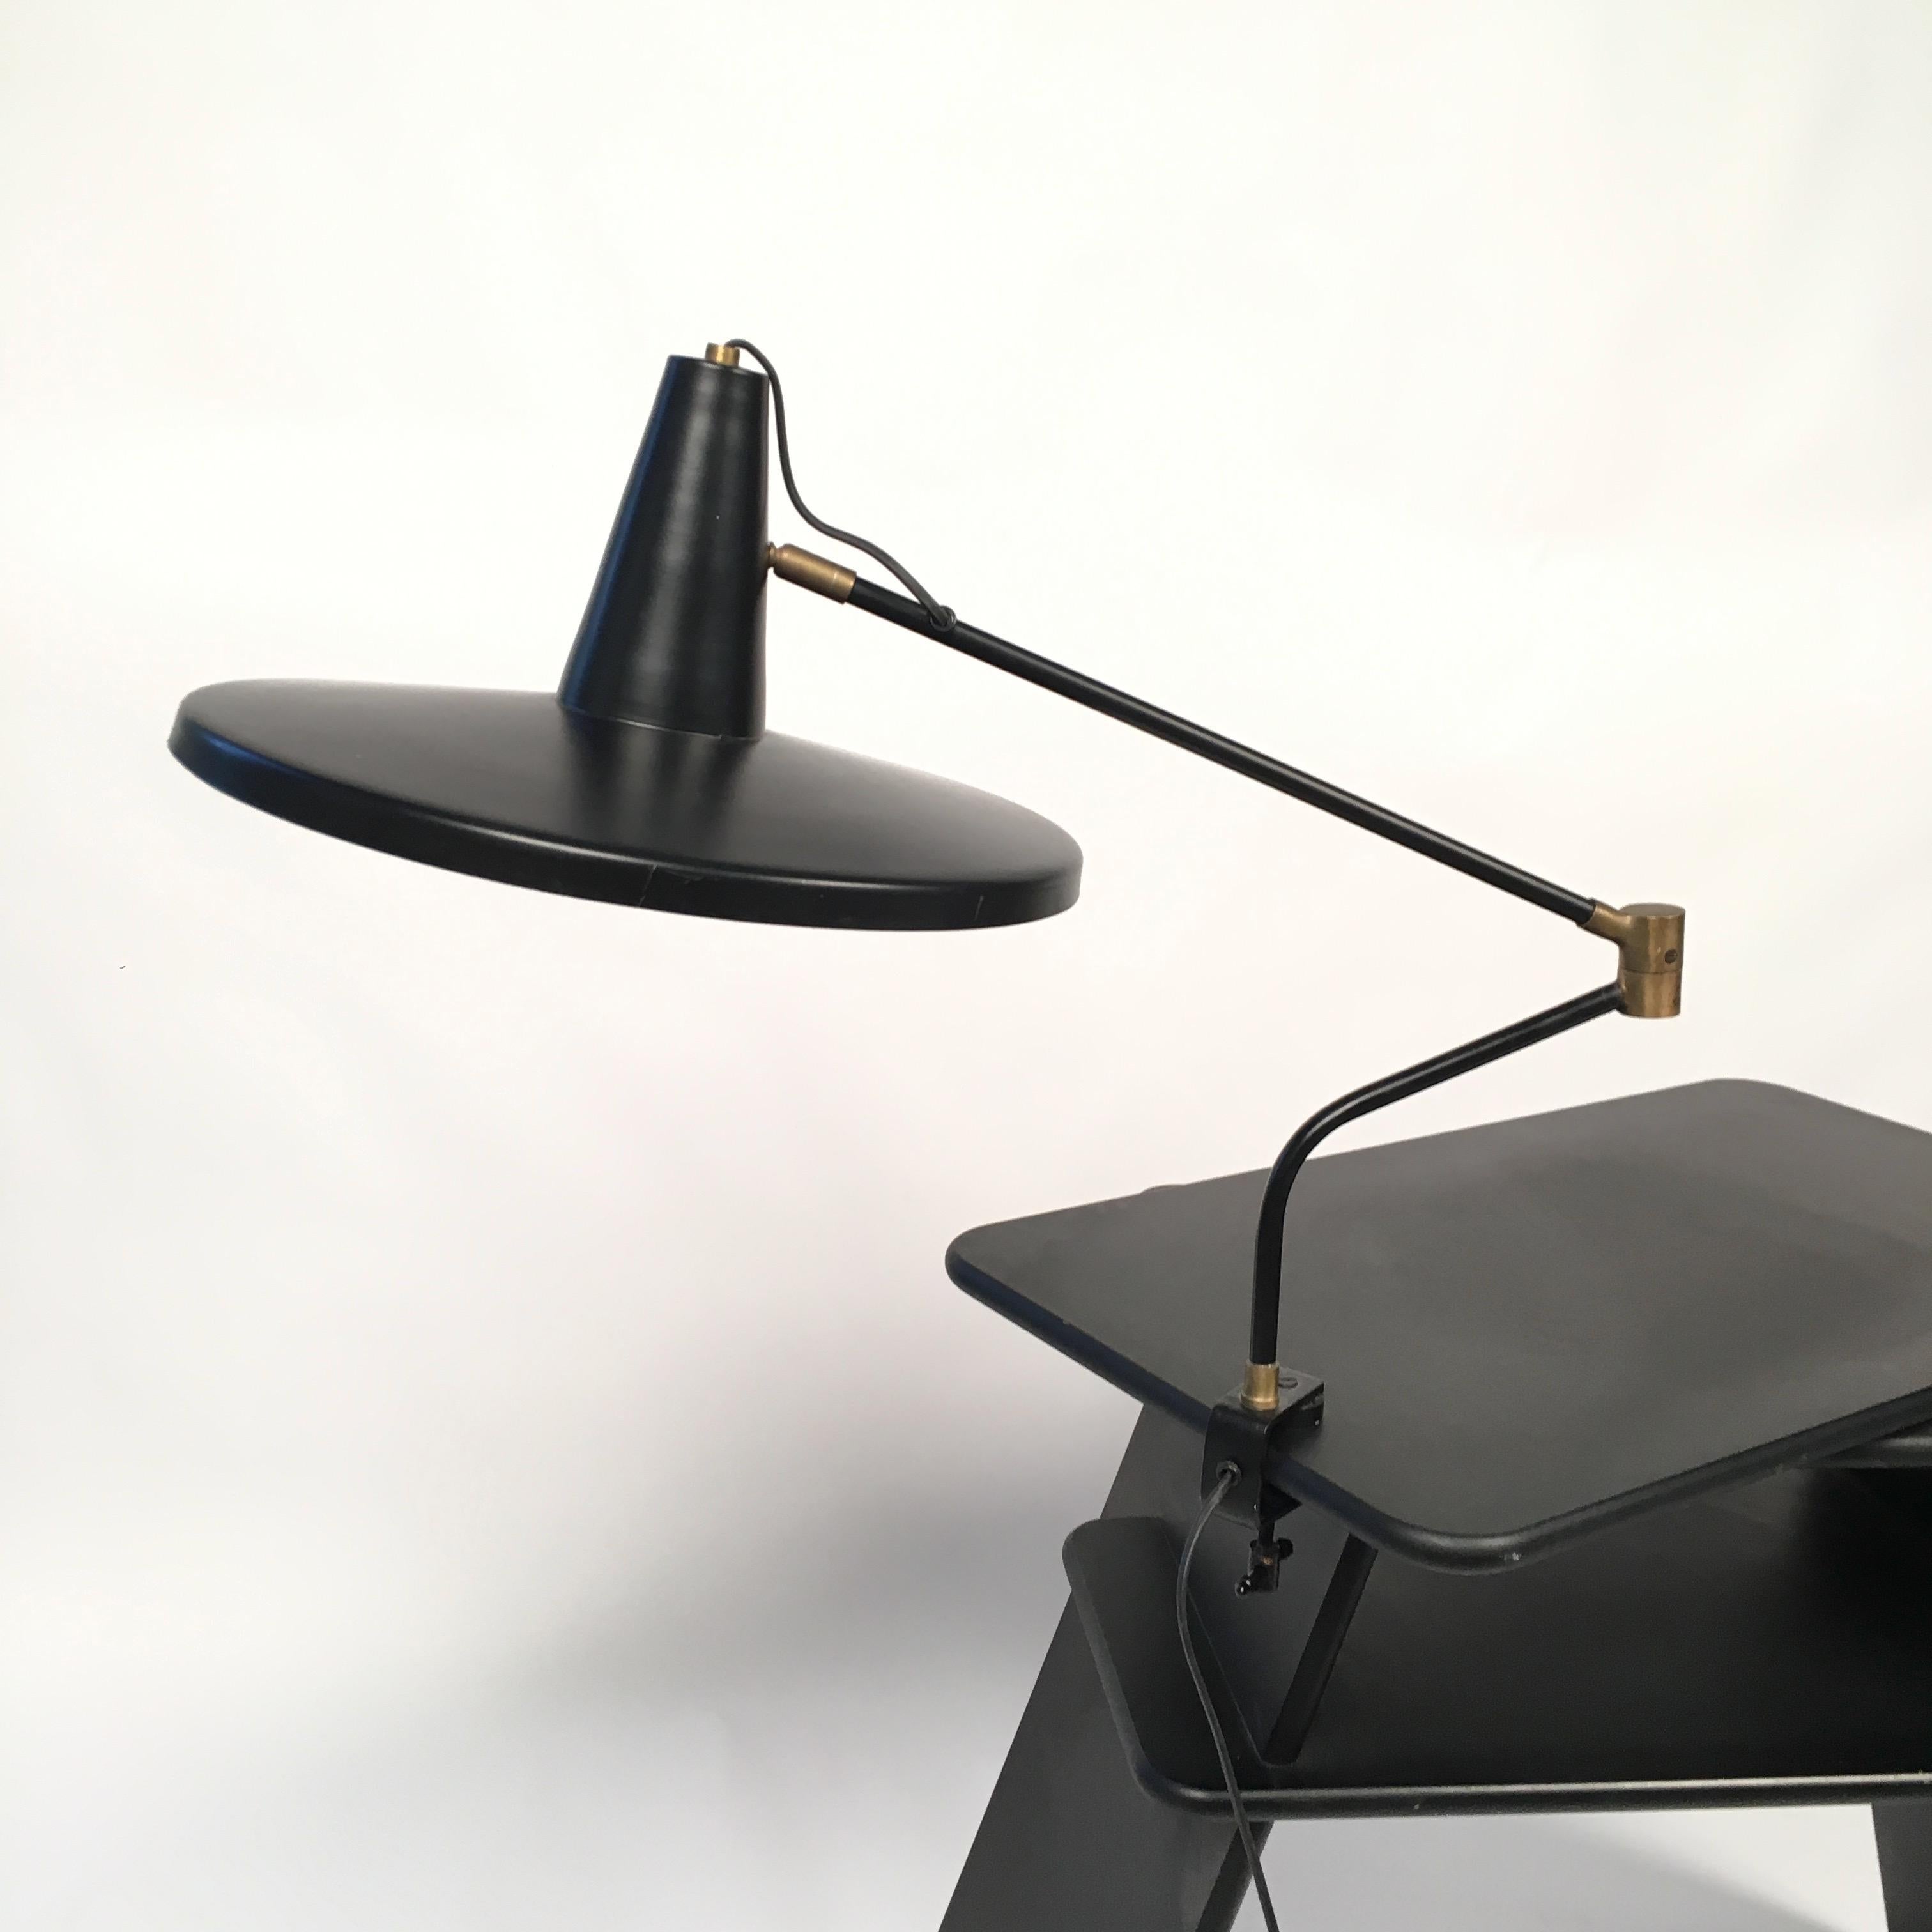 Adjustable articulated desk lamp in Stilnovo style, in black metal and brass.

Dimensions: shorter arm 22 cm; longer arm 46 cm; cup diameter 39 cm.